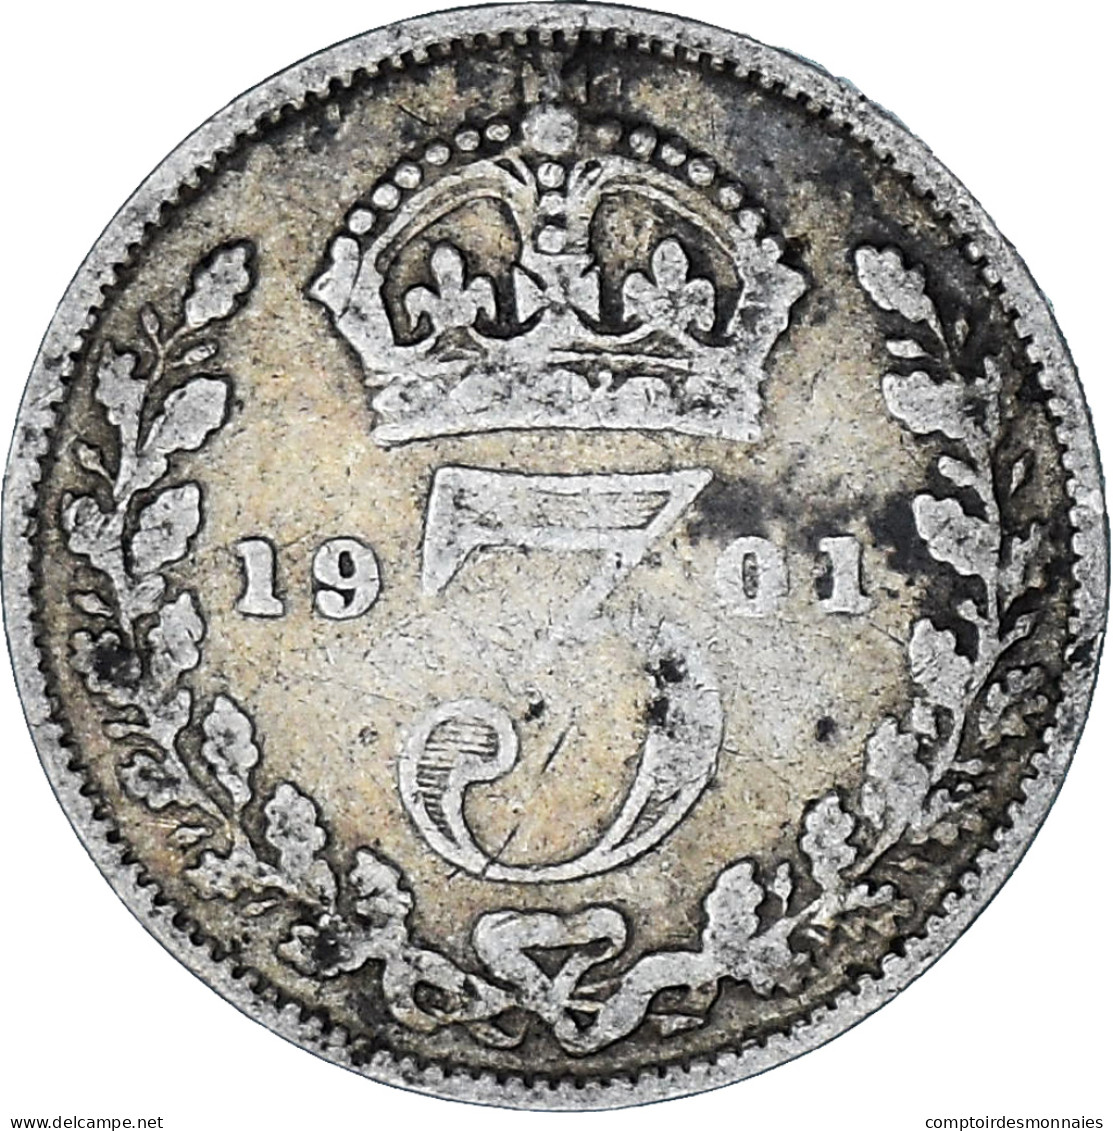 Monnaie, Grande-Bretagne, Victoria, 3 Pence, 1901, TB+, Argent, KM:777 - F. 3 Pence